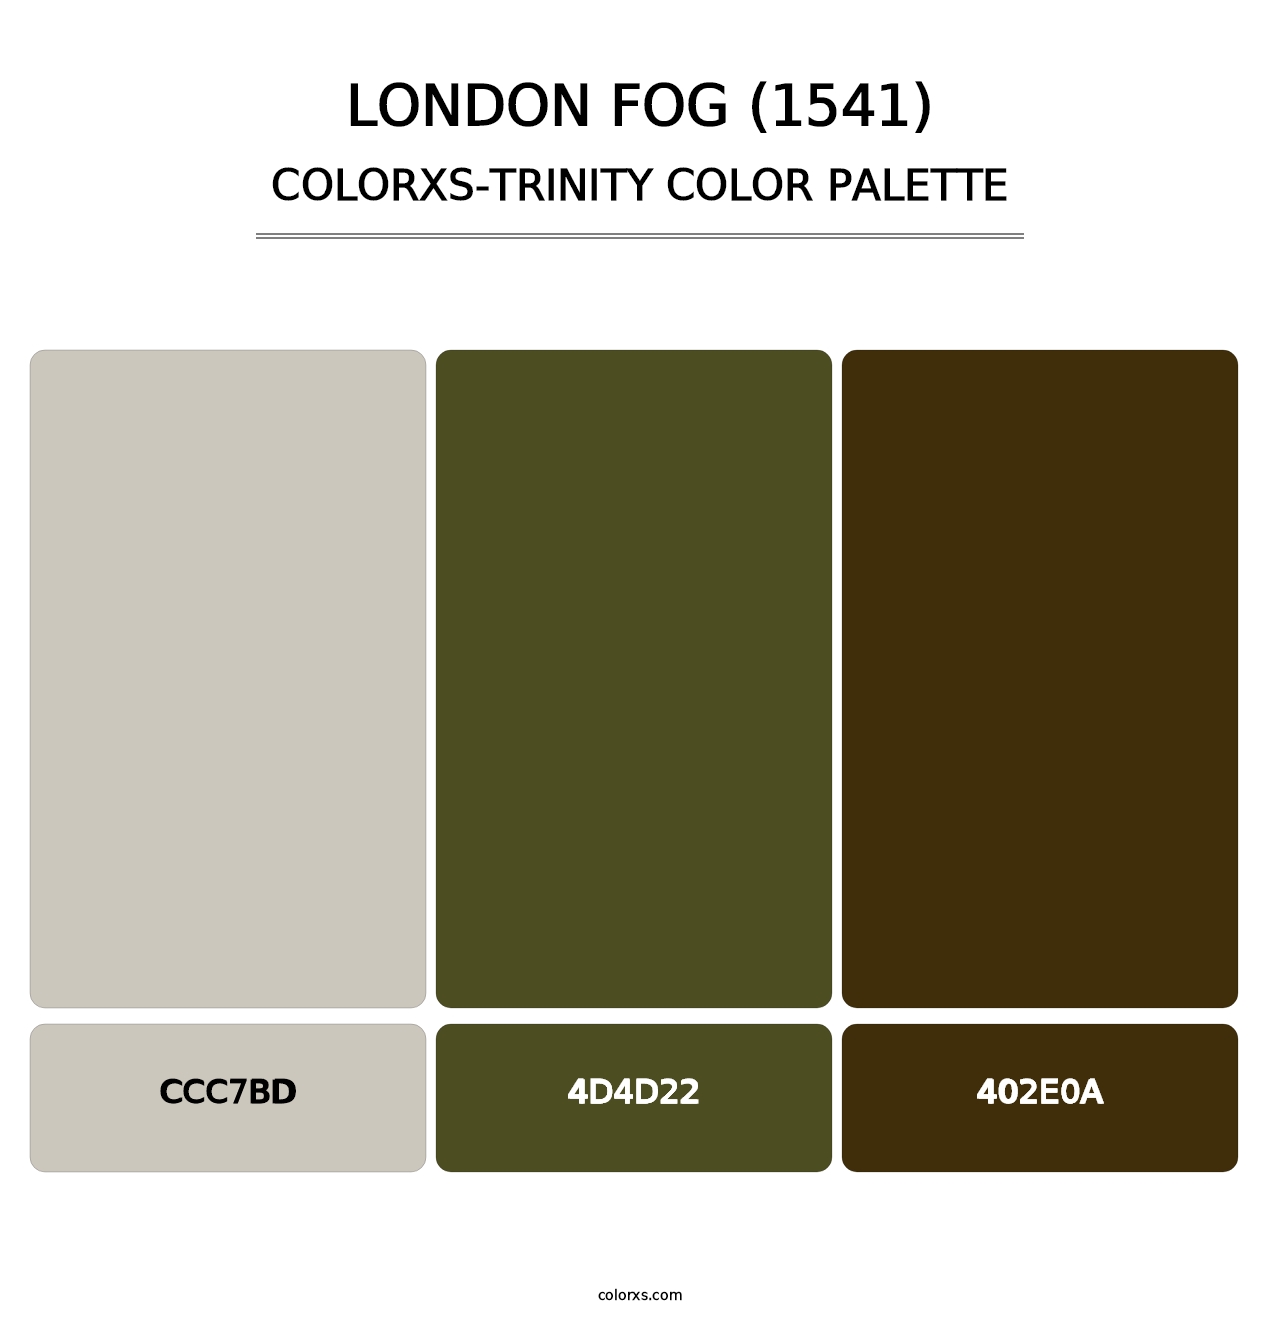 London Fog (1541) - Colorxs Trinity Palette